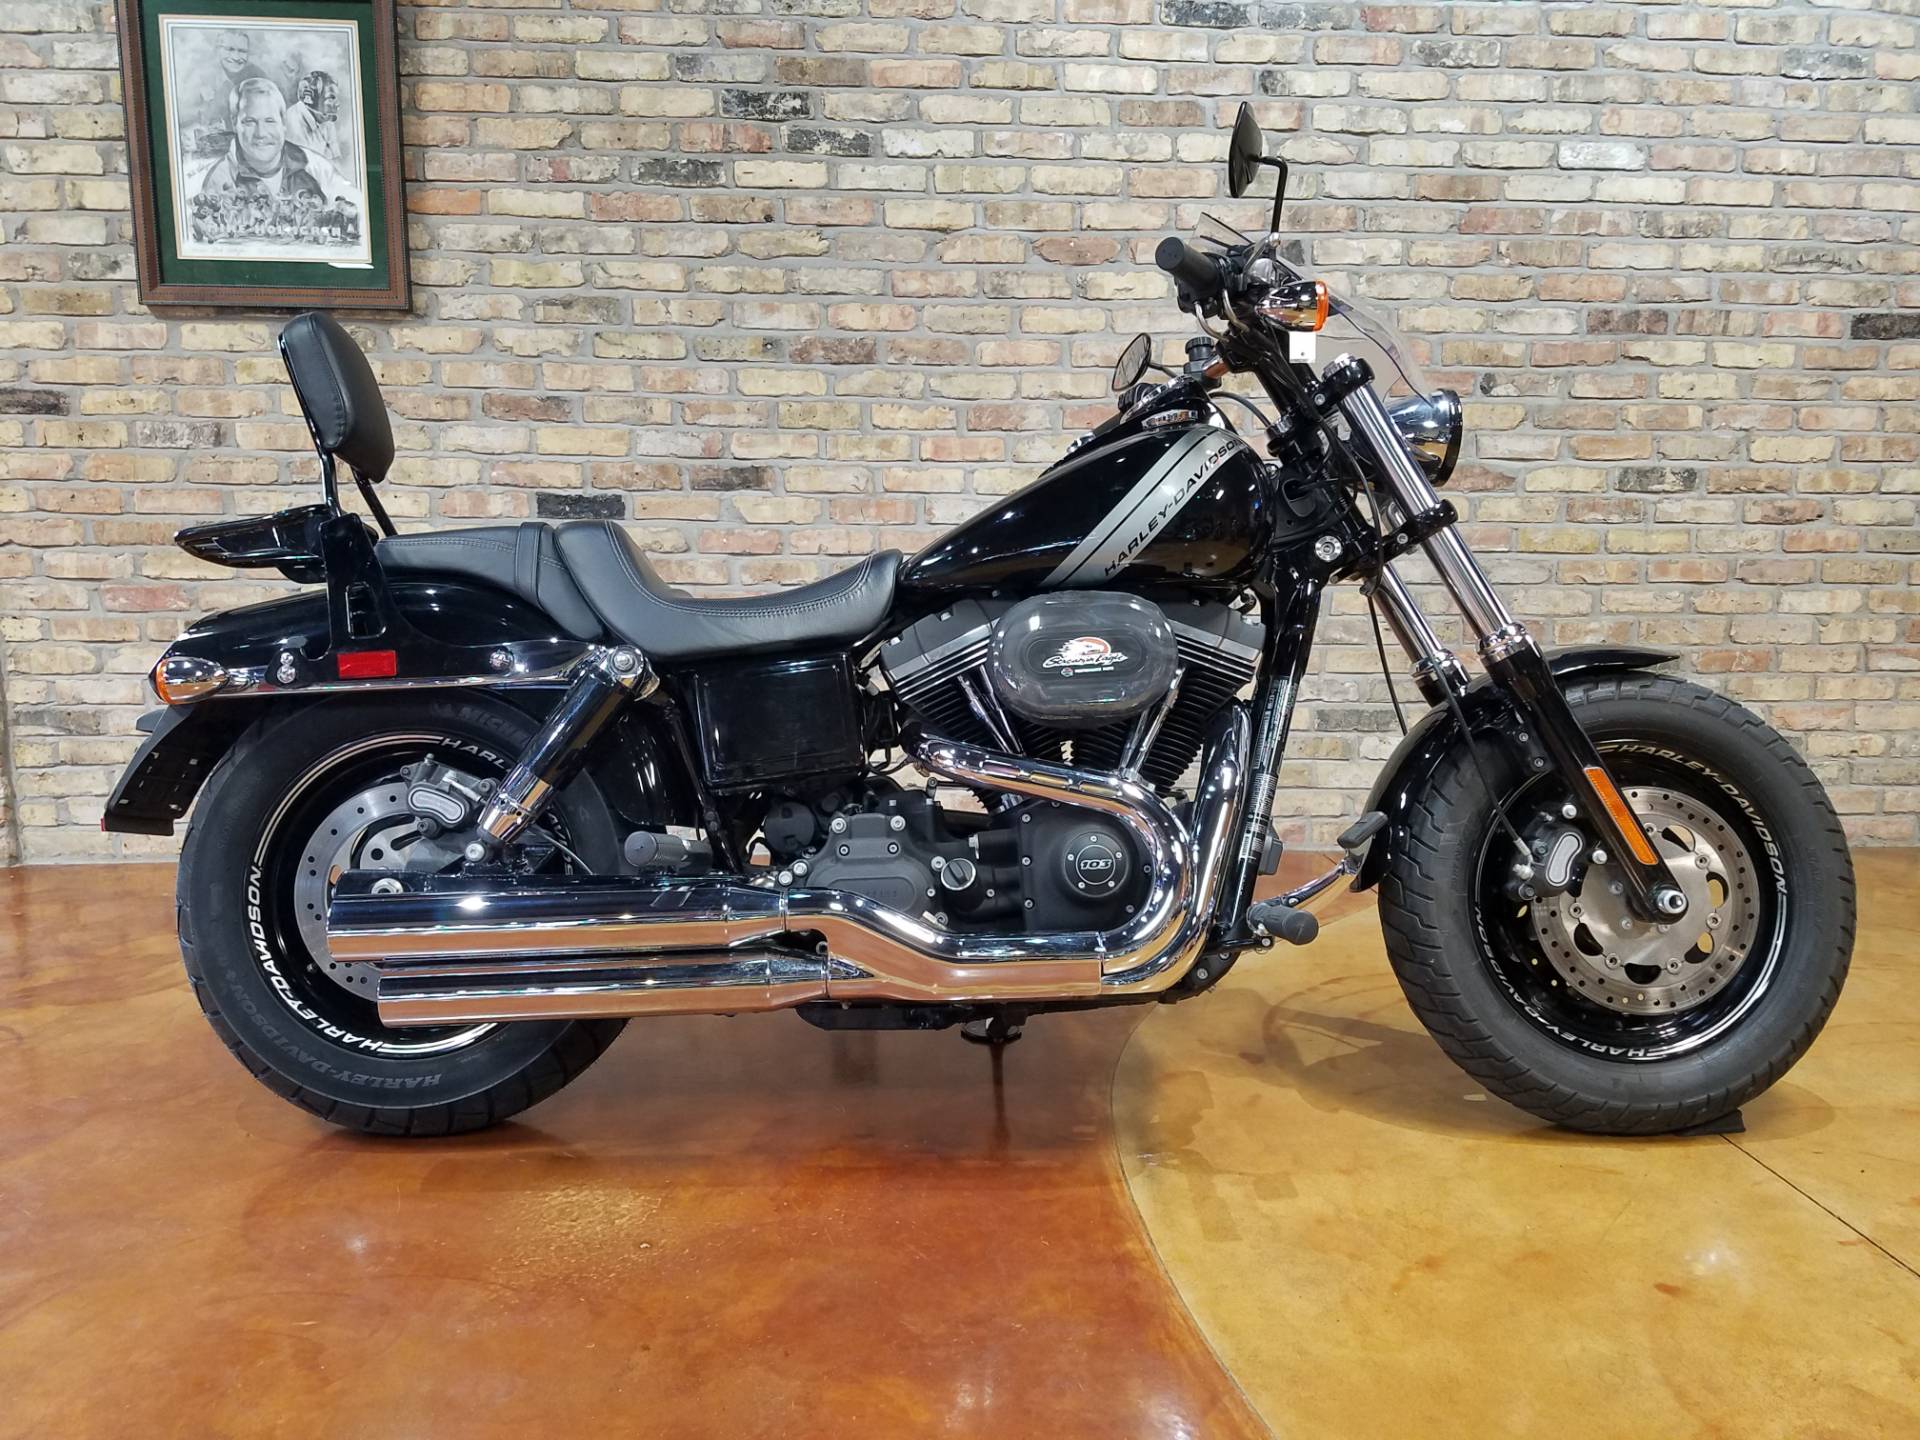 Used 2014 Harley Davidson Dyna Fat Bob Motorcycles In Big Bend Wi 4386 Vivid Black